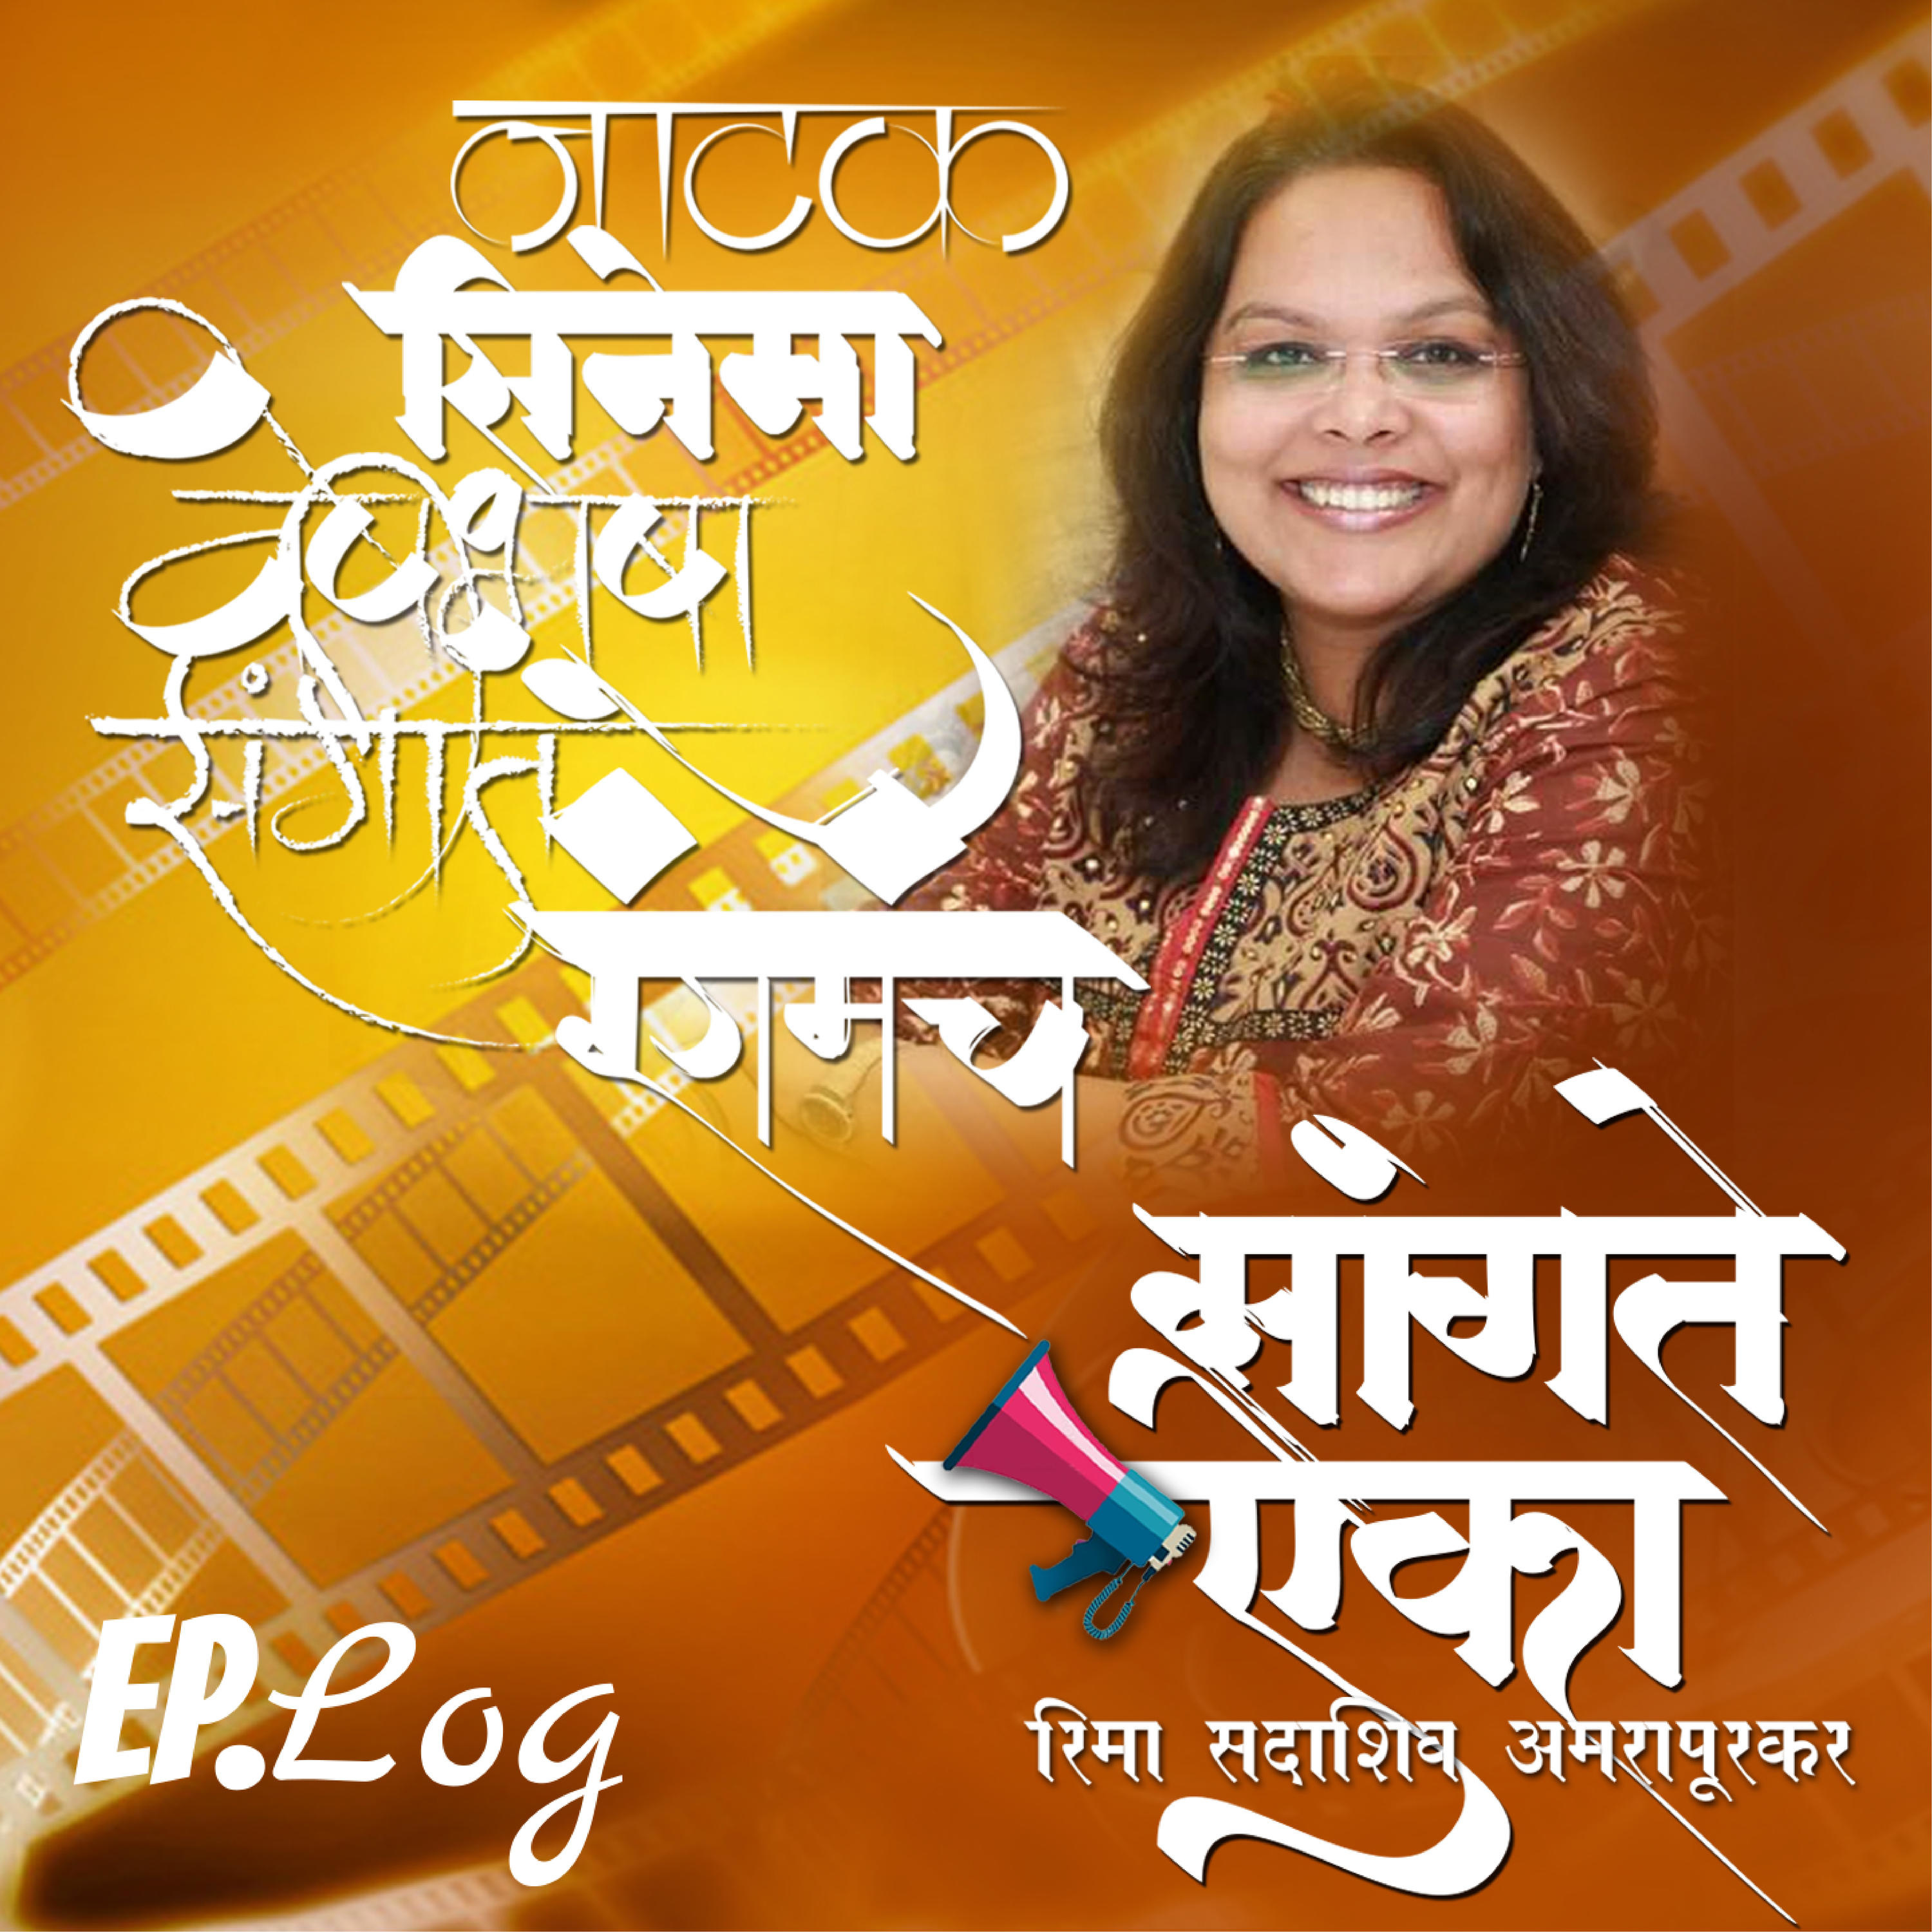 REVIEW: DRAMA- 'Bai wajaa Aai' & 'Haravlelya Pattyancha Bangla'